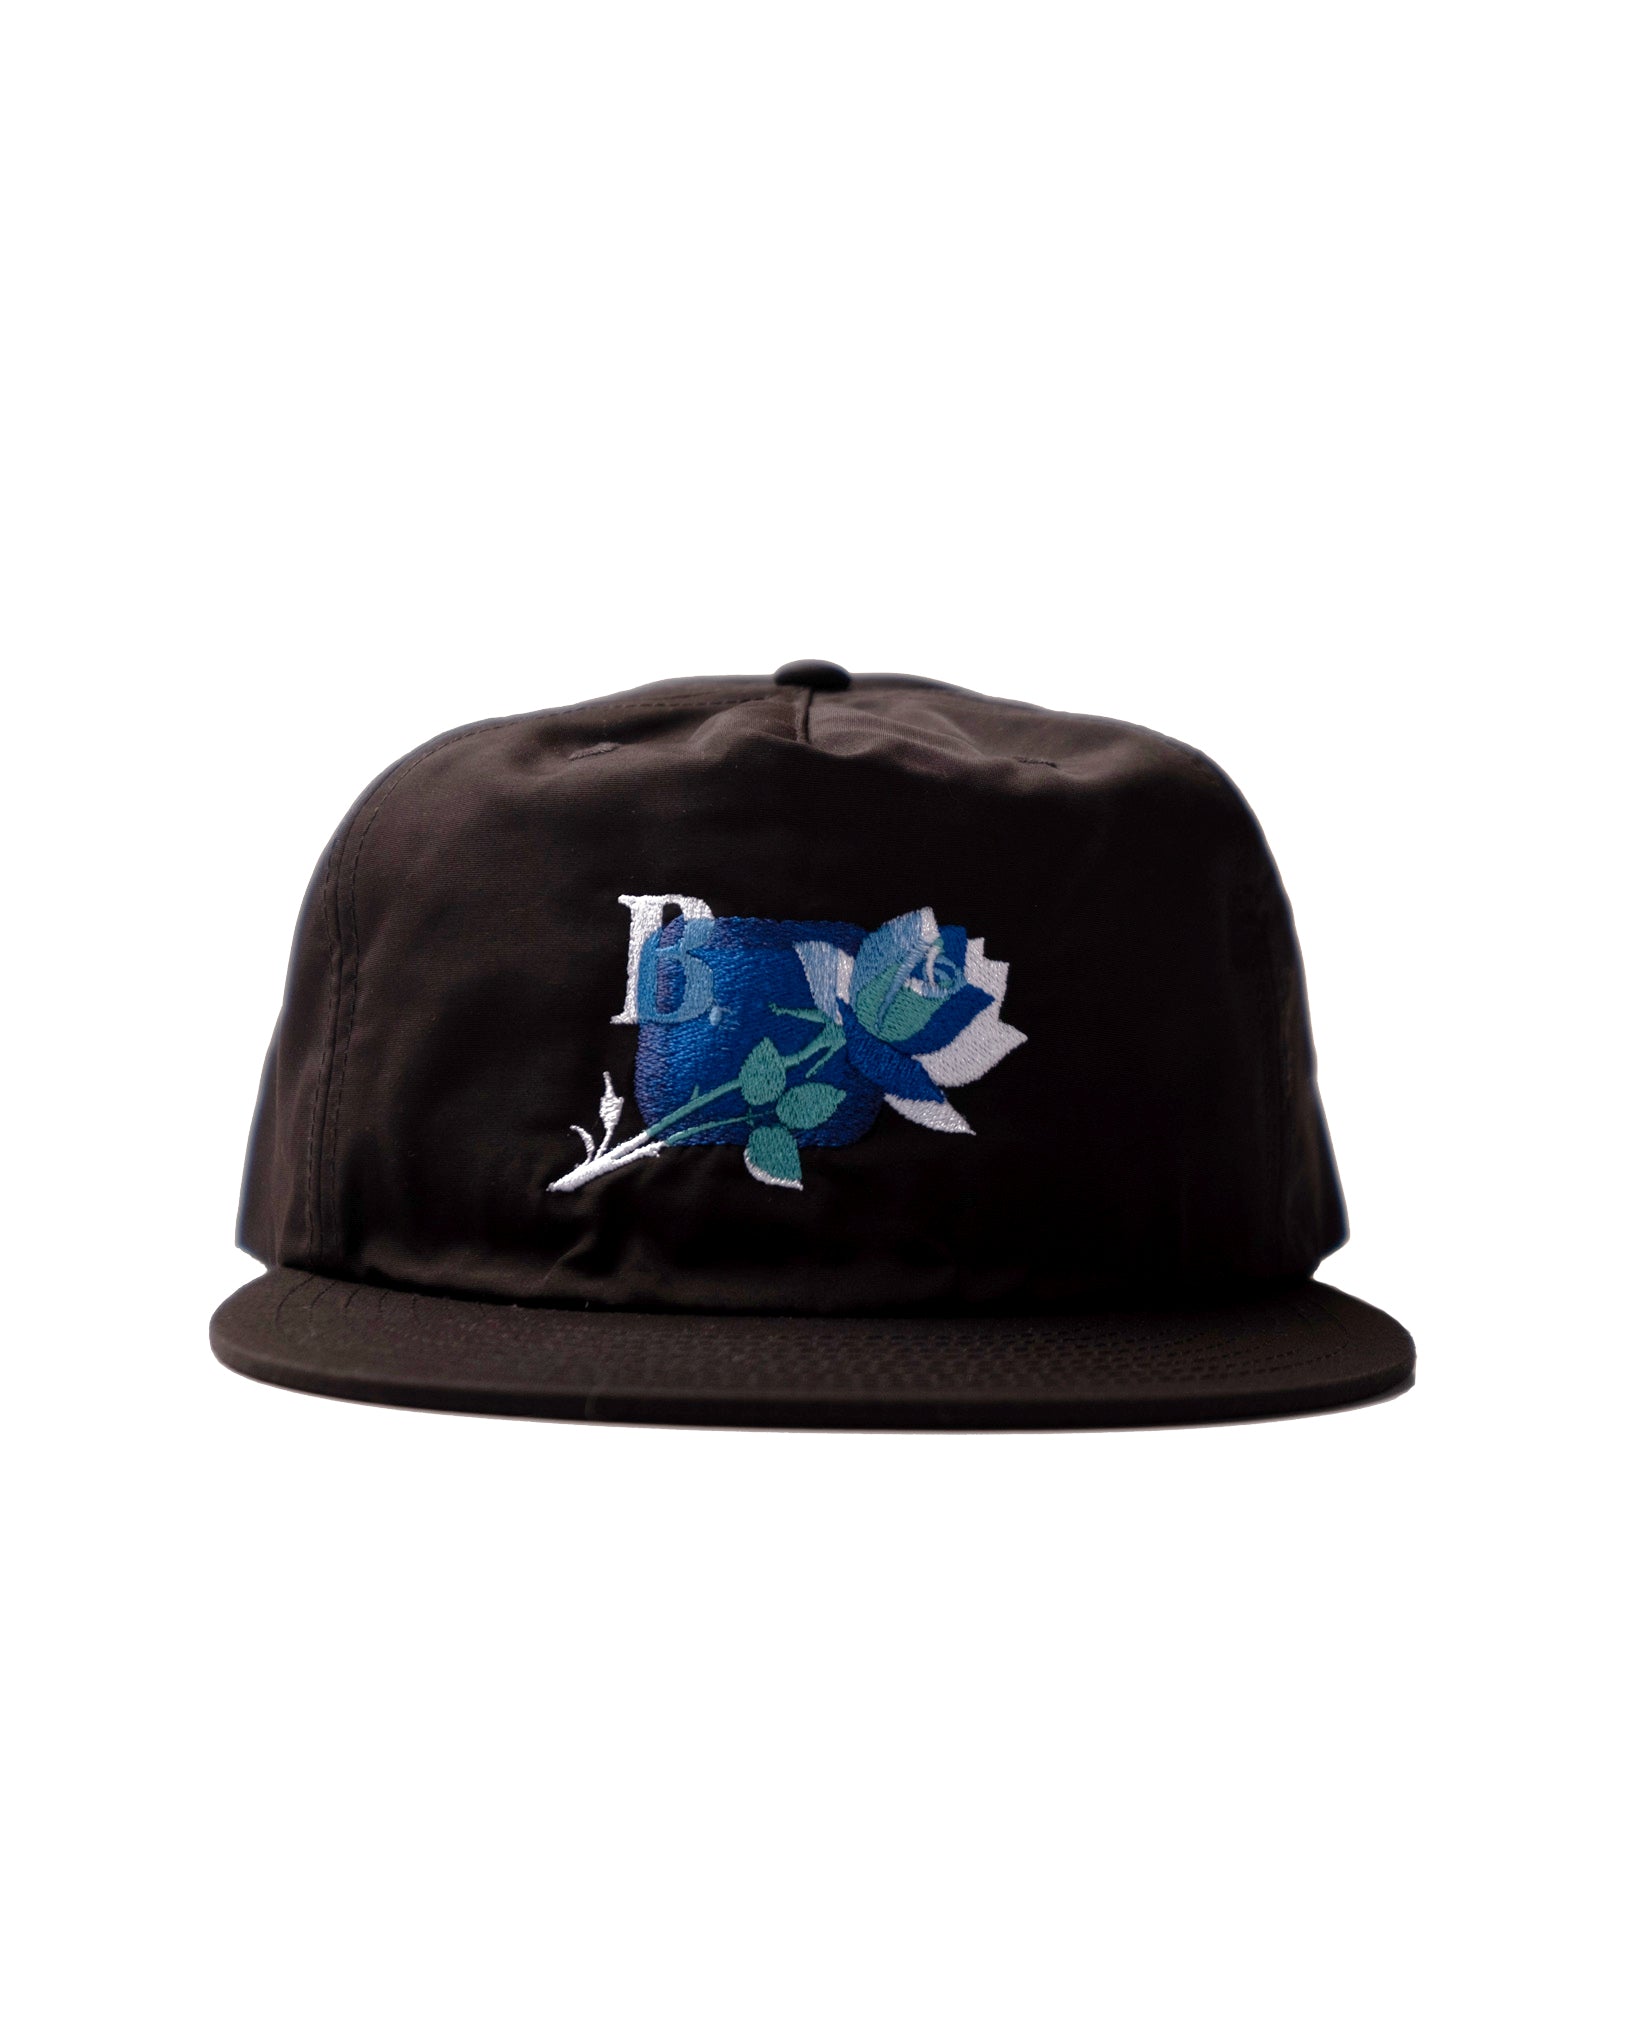 B rose hat